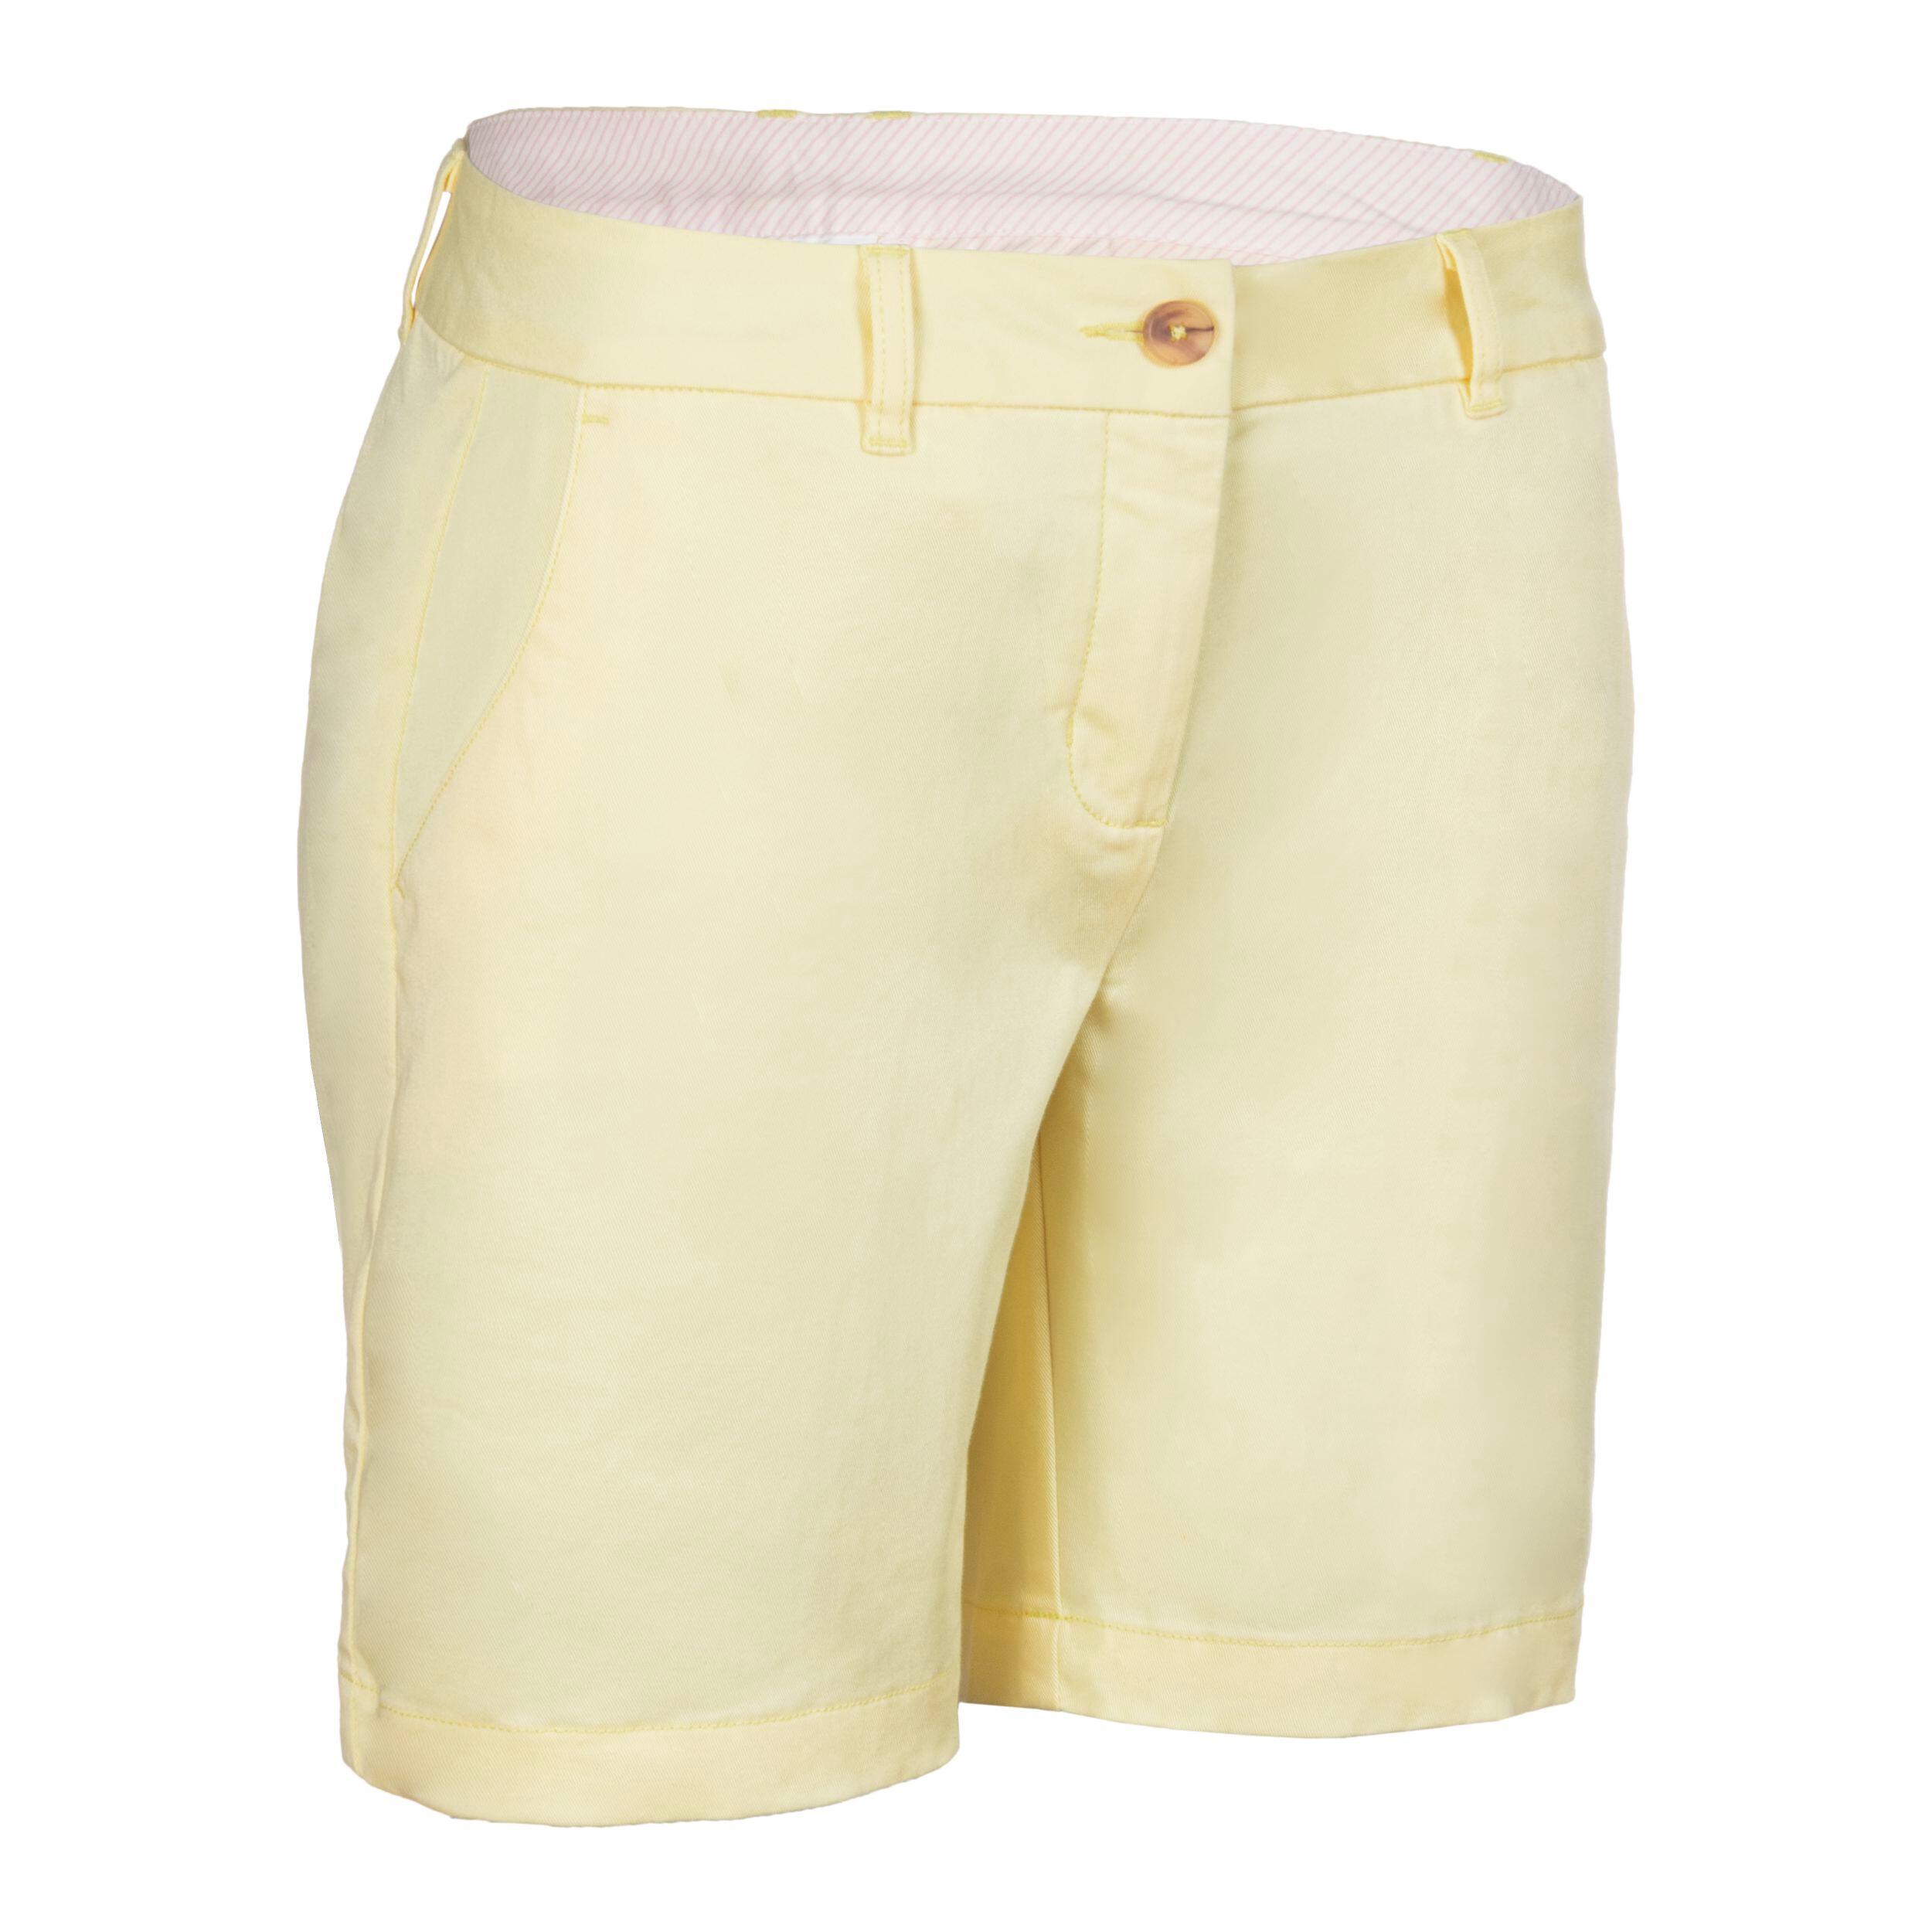 Women's Golf Chino Shorts - MW500 Pastel Yellow 7/7